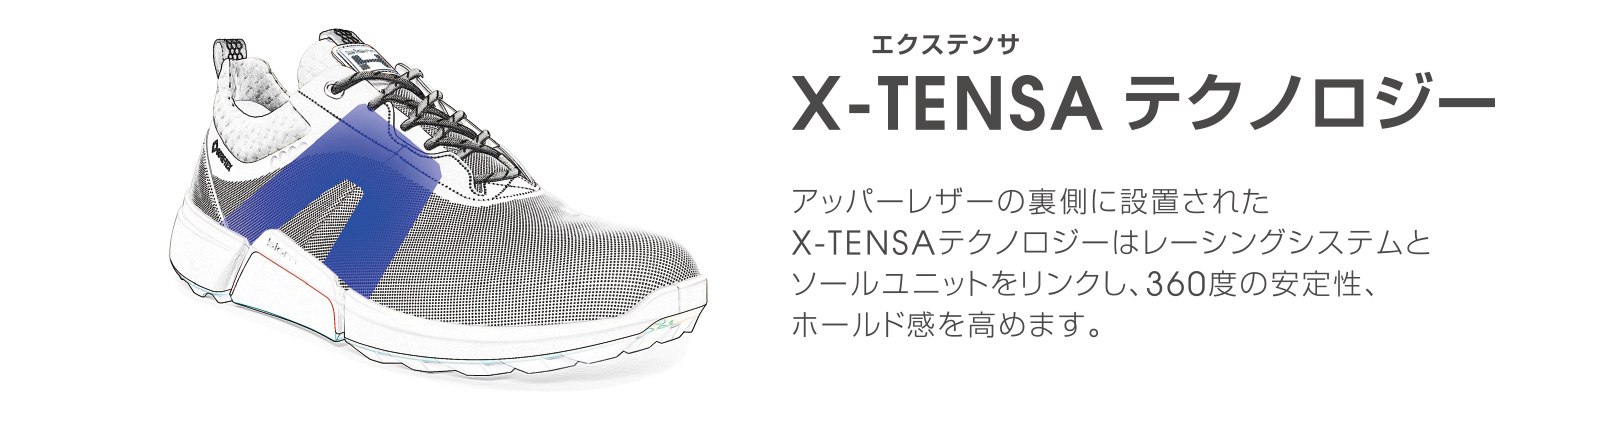 X-TENSA テクノロジー